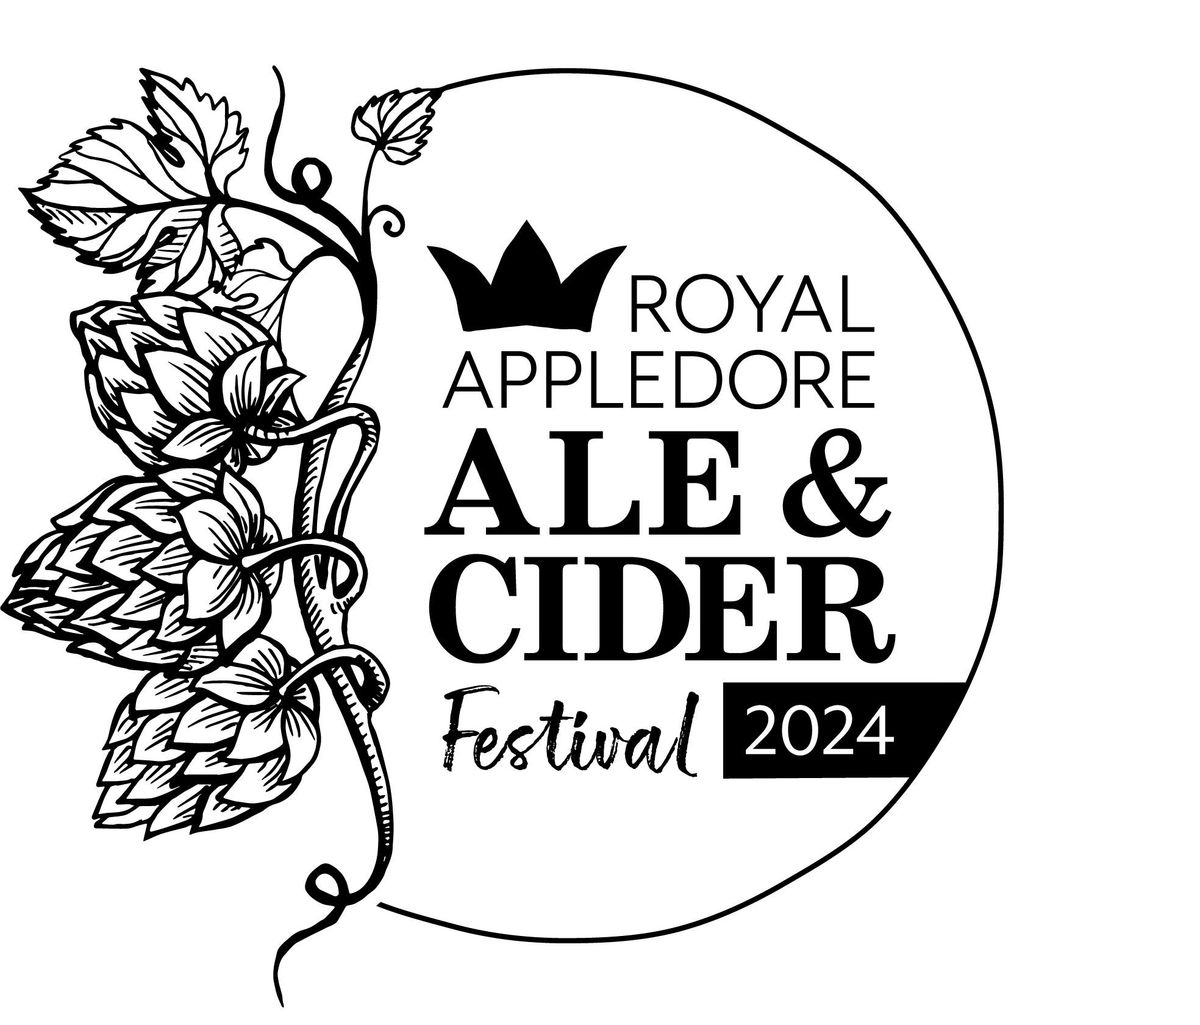 Royal Appledore Ale & Cider Festival